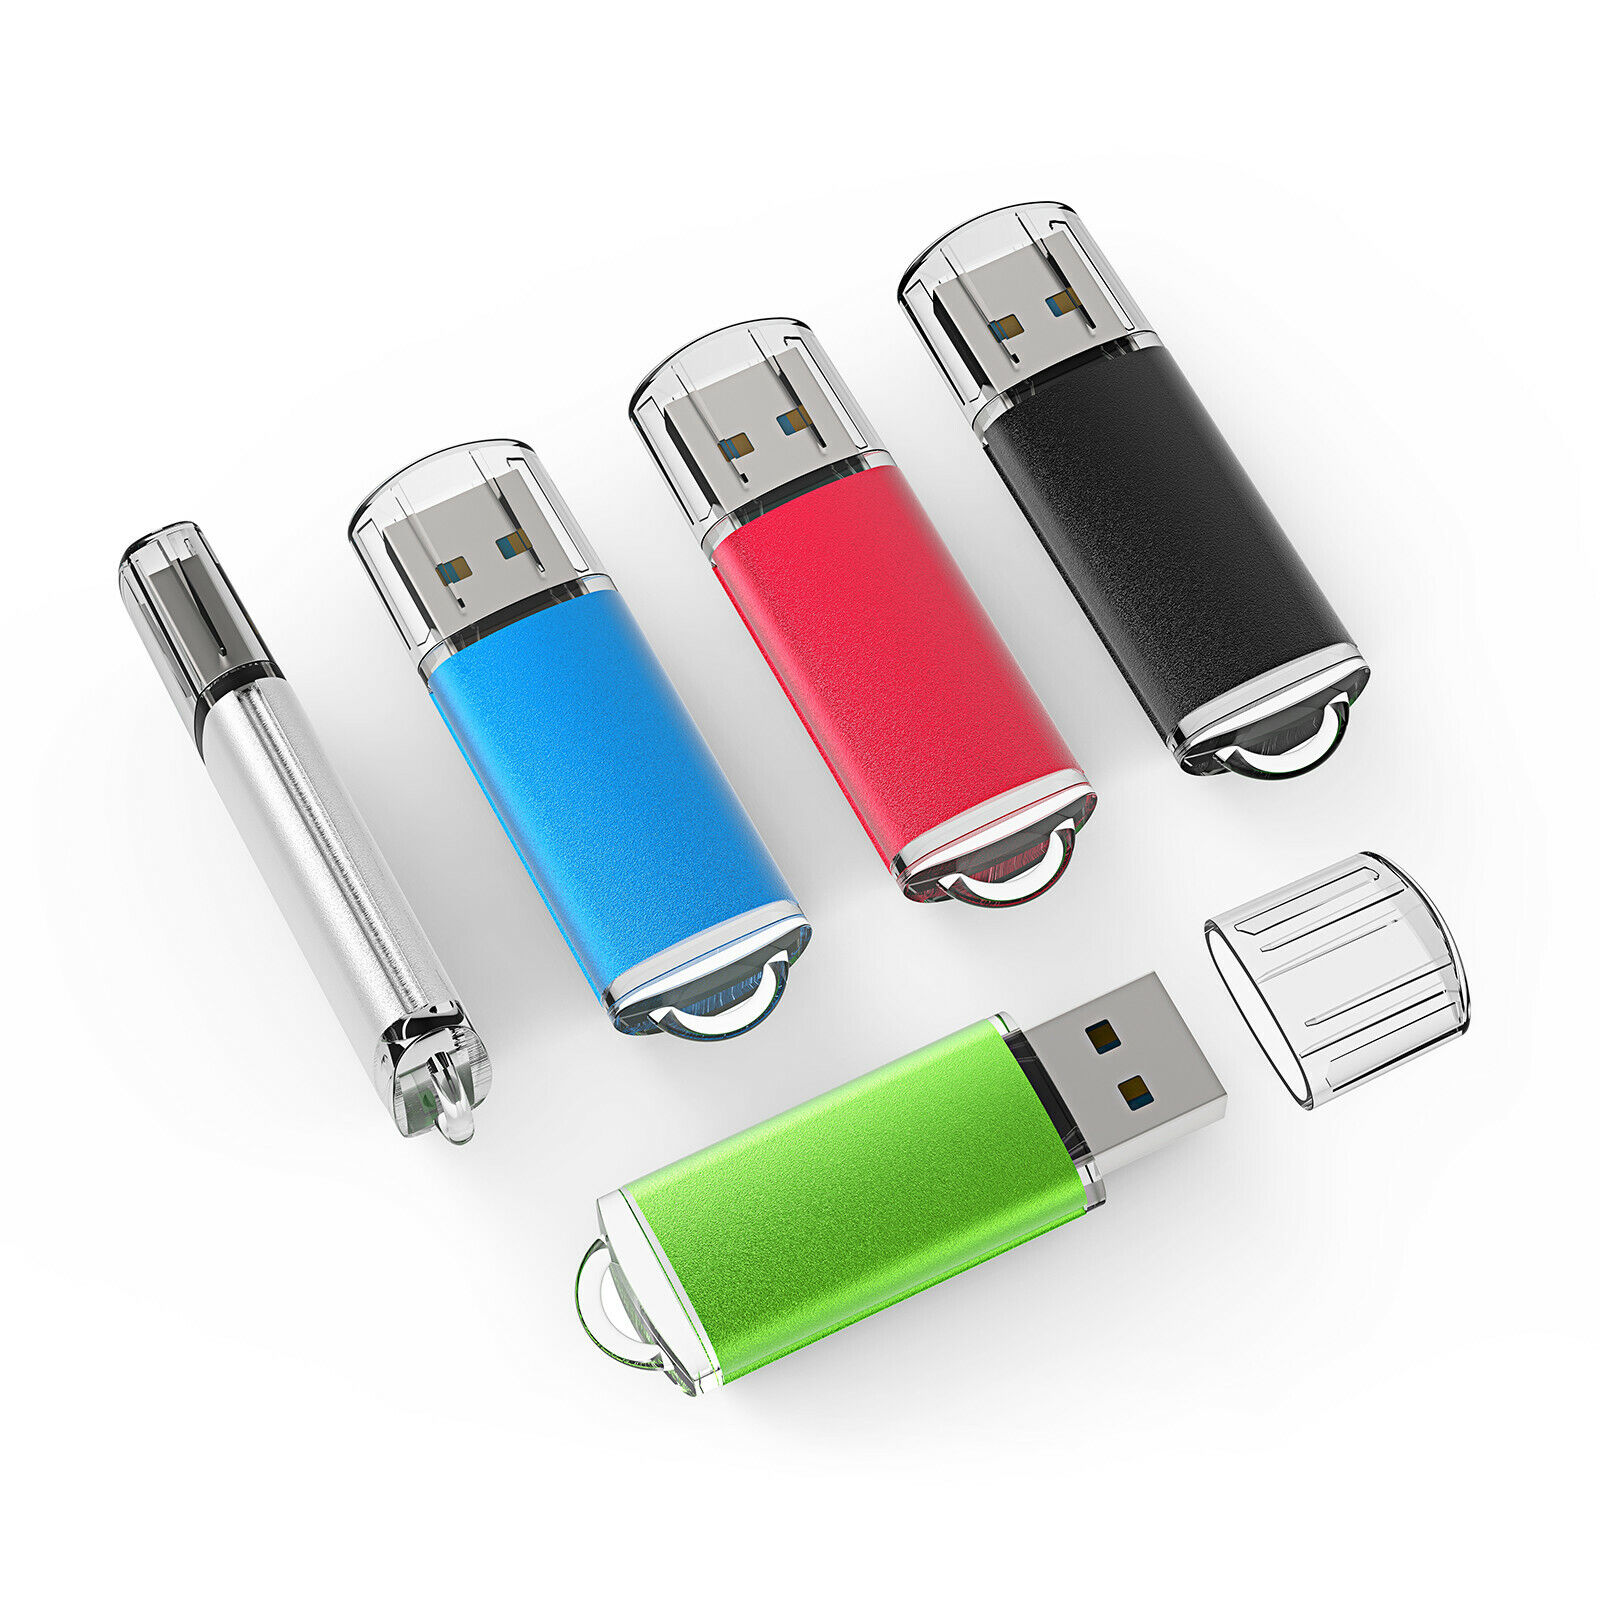 4 Pack 16GB USB 2.0 Flash Drive Memory Stick Thumb Drive Pen Drive Storage Kootion Does not apply - фотография #2